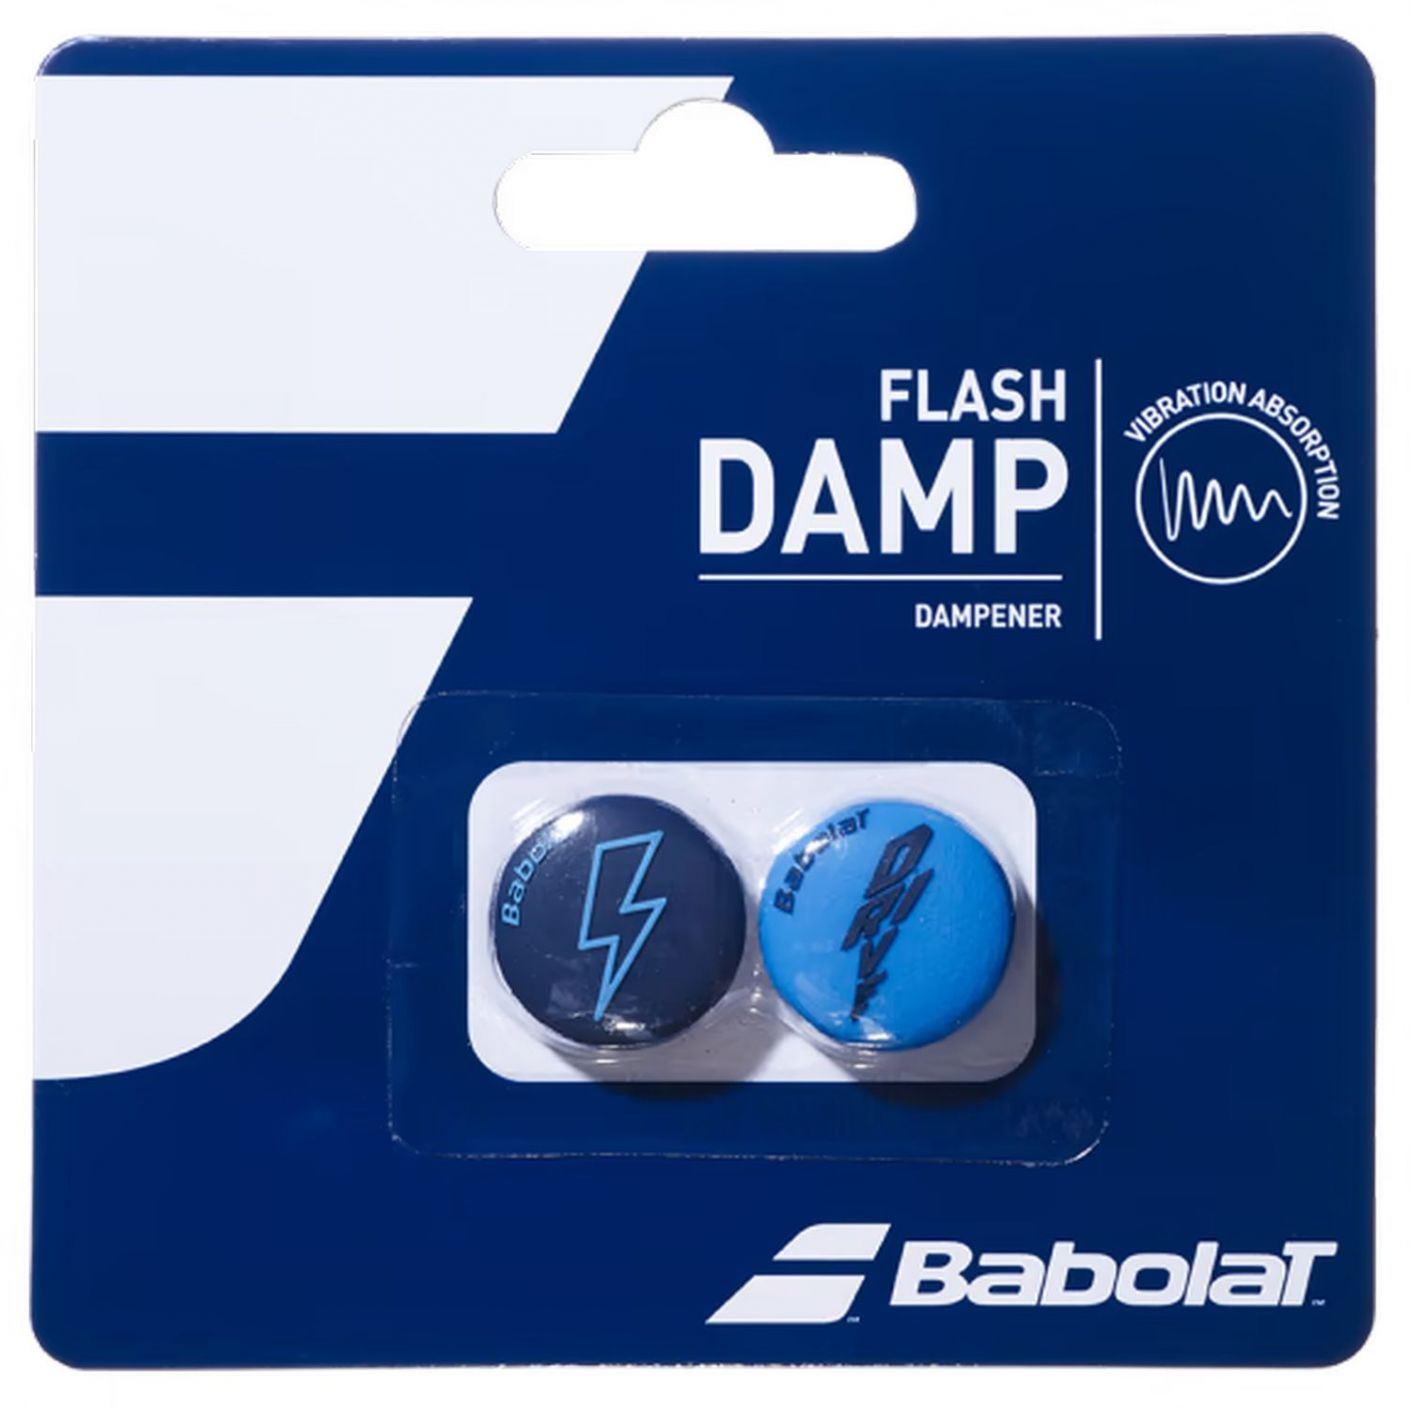 Babolat Flash damp #13